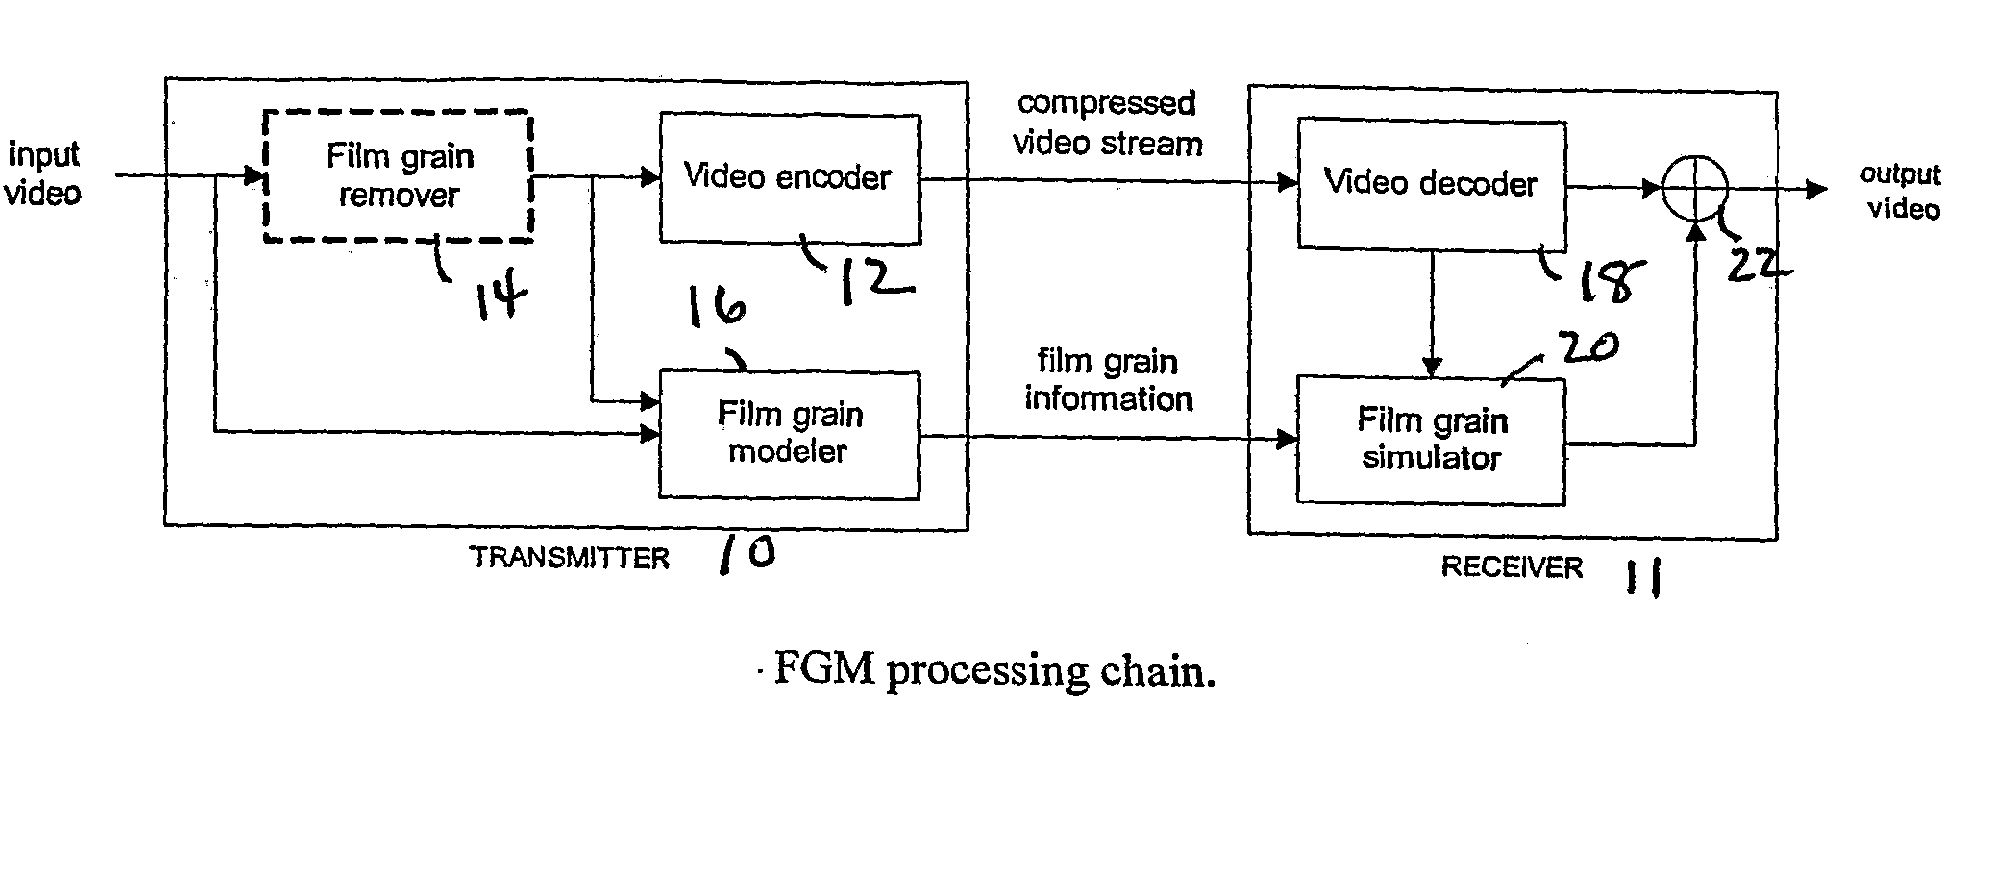 Film Grain Simulation Method Based on Pre-Computed Transform Coefficients